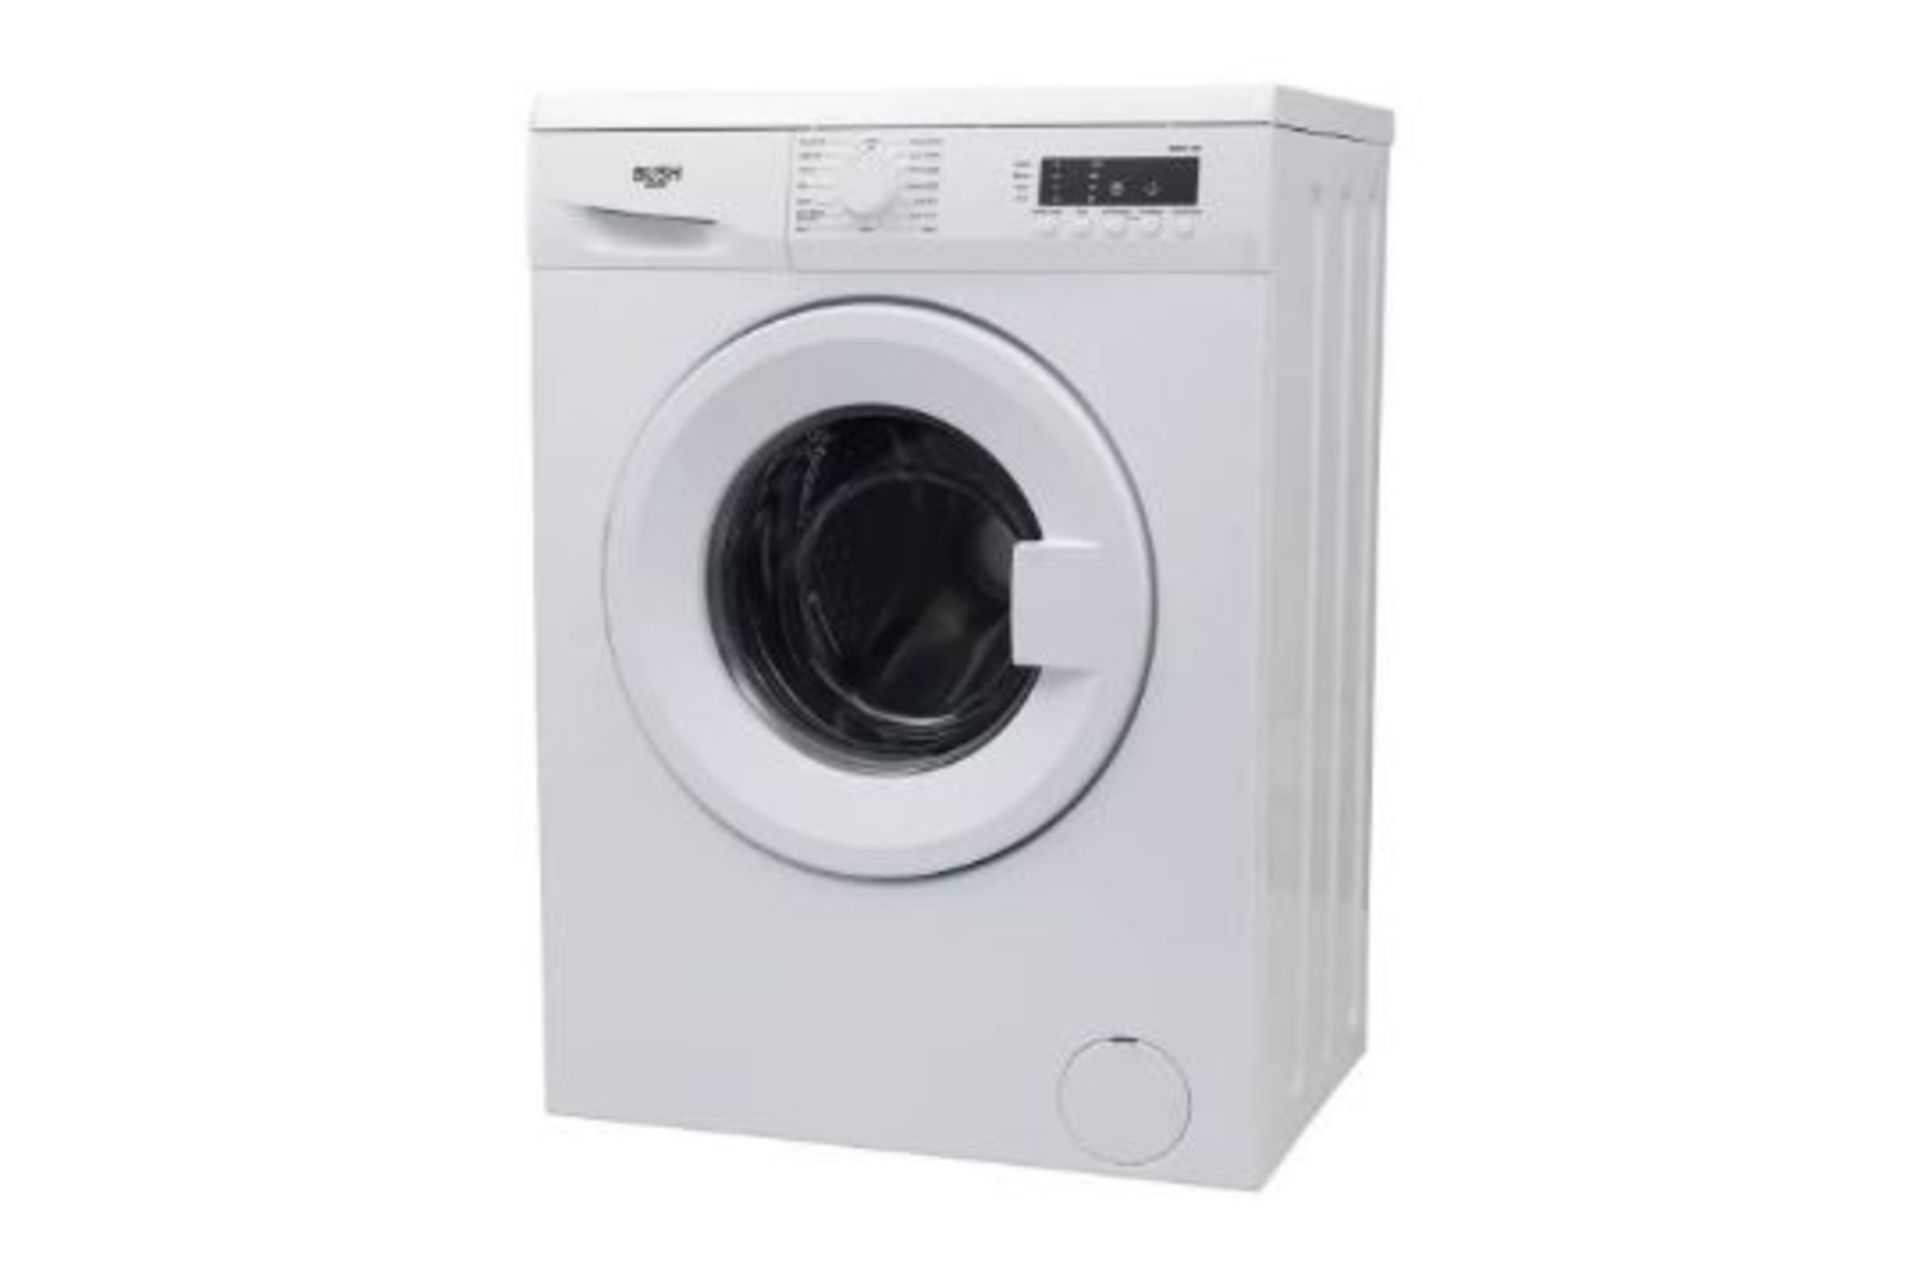 Bush WMDF612W 6KG 1200 Spin Washing Machine - White - ARGOS RRP £179.99 - Image 2 of 5